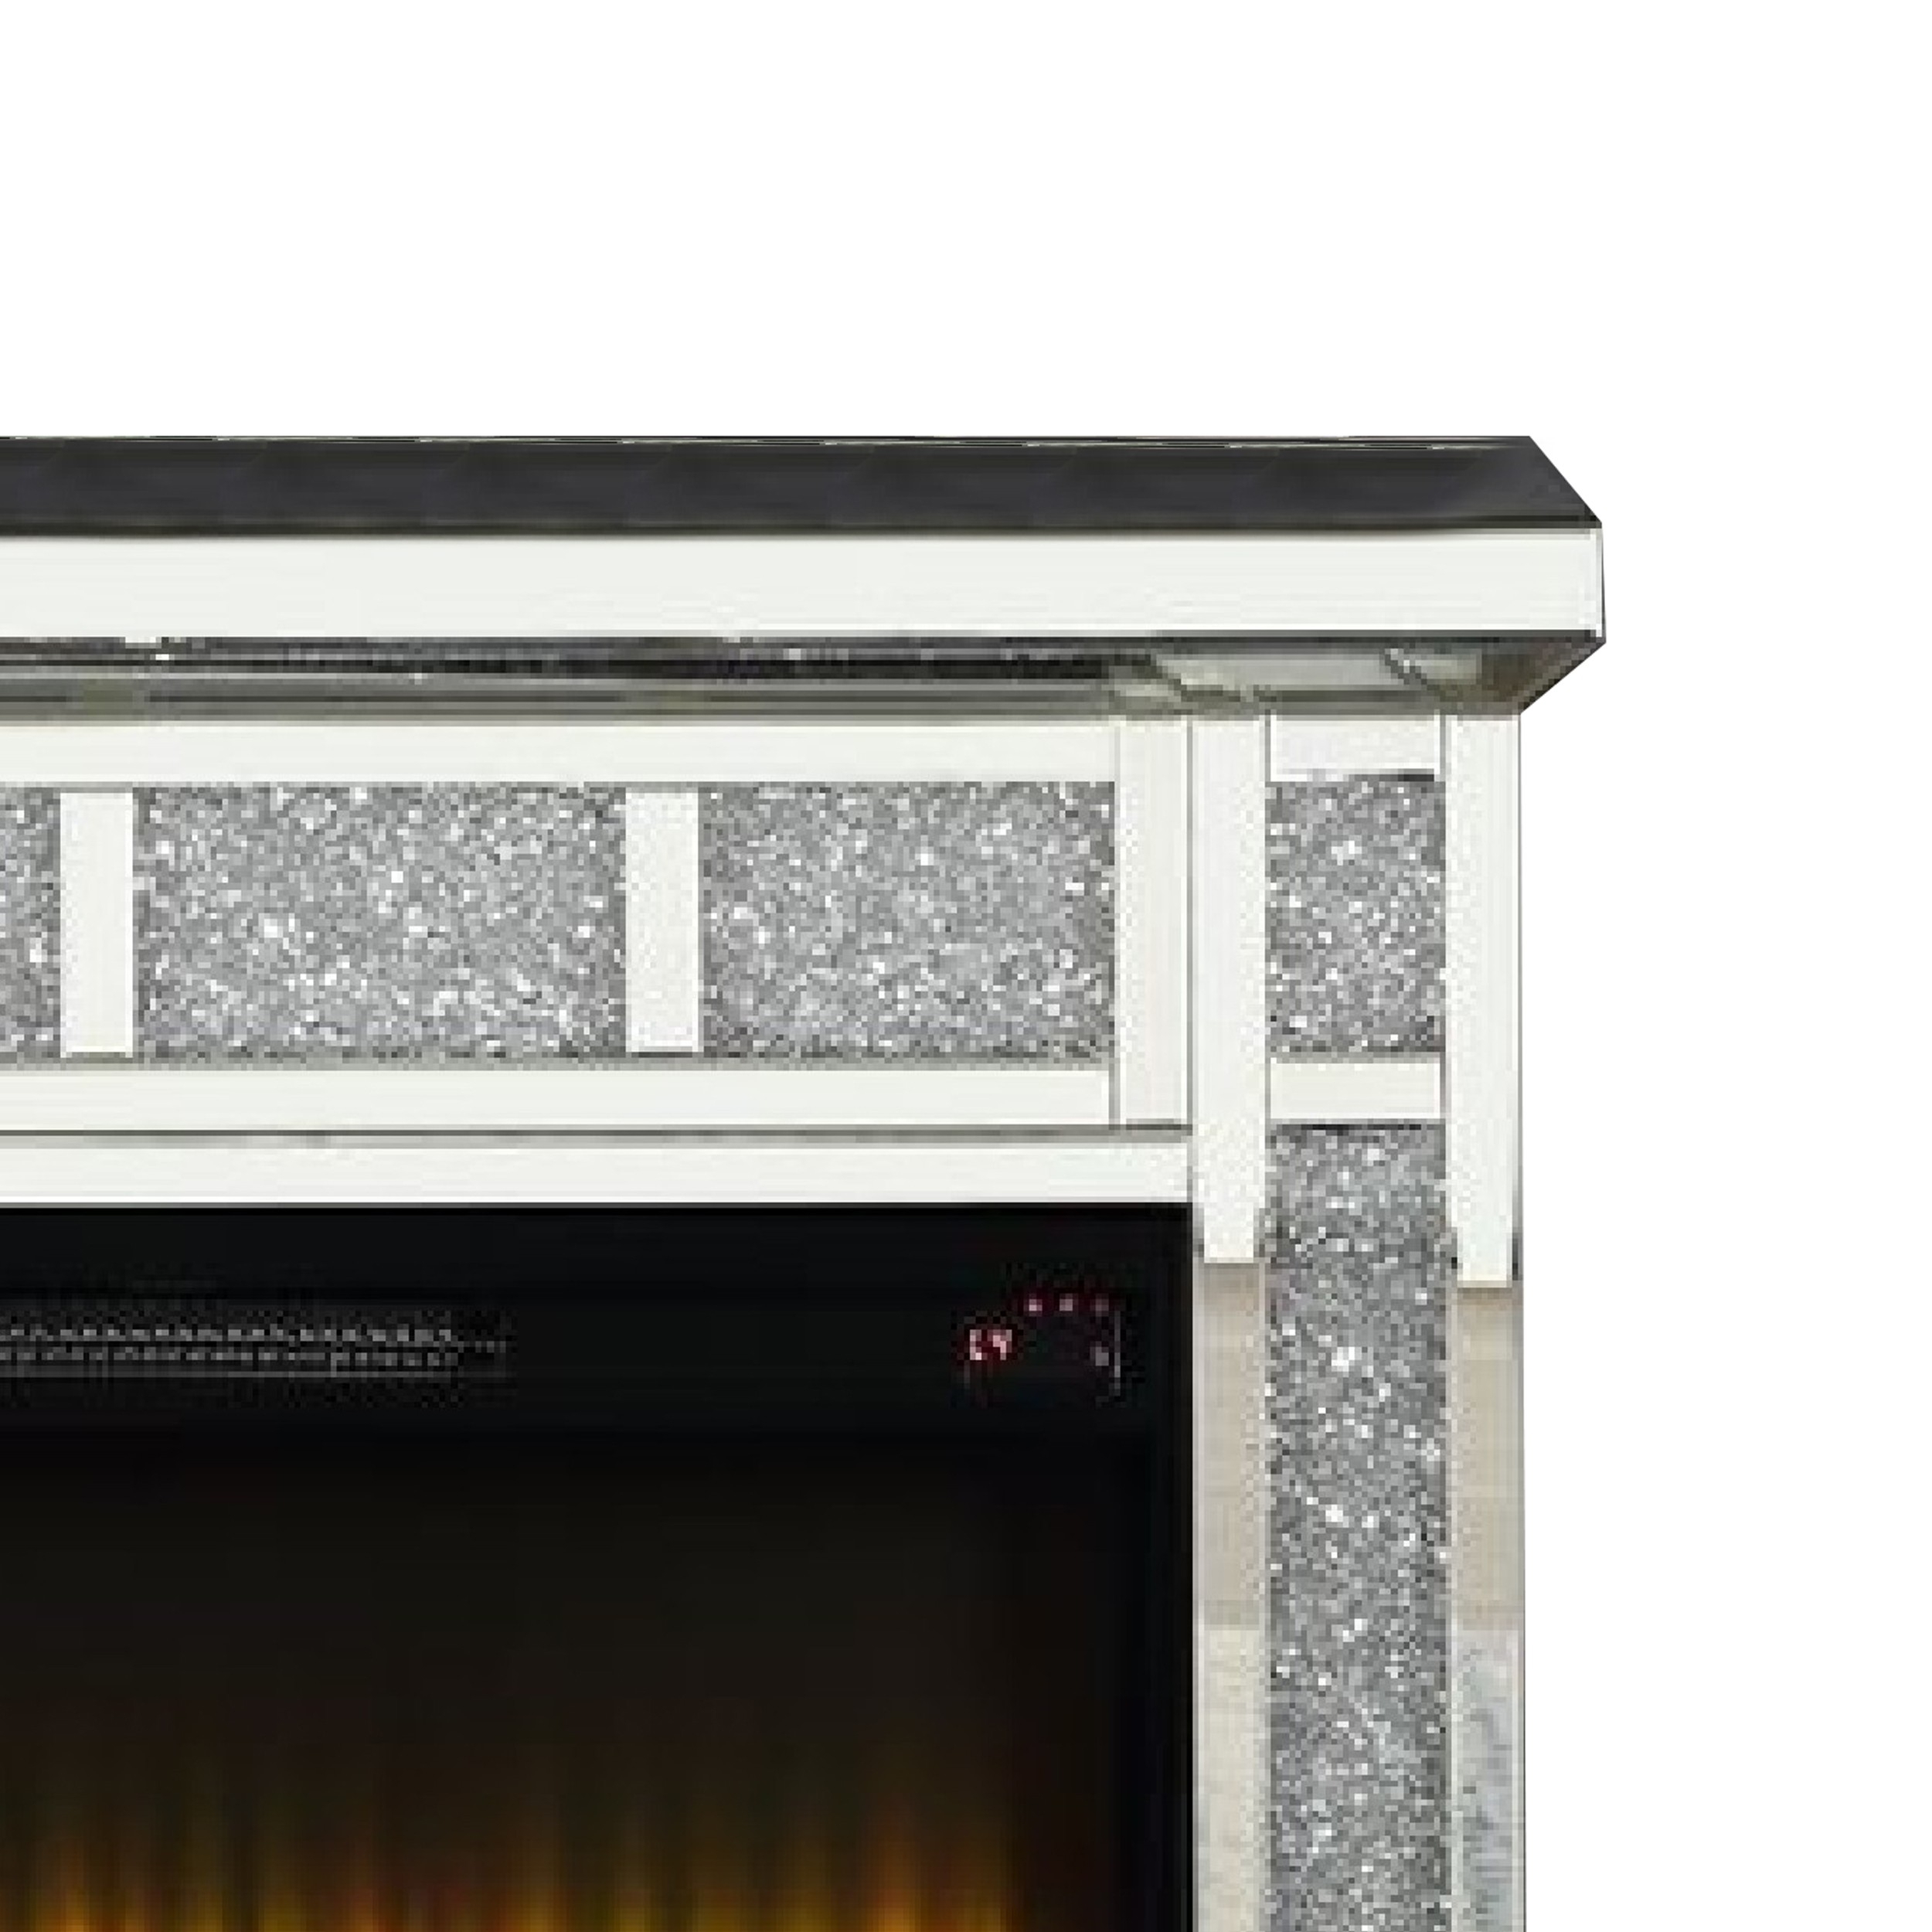 Noe 39 Inch Mirrored LED Electric Fireplace, Remote, Faux Diamond, Silver- Saltoro Sherpi